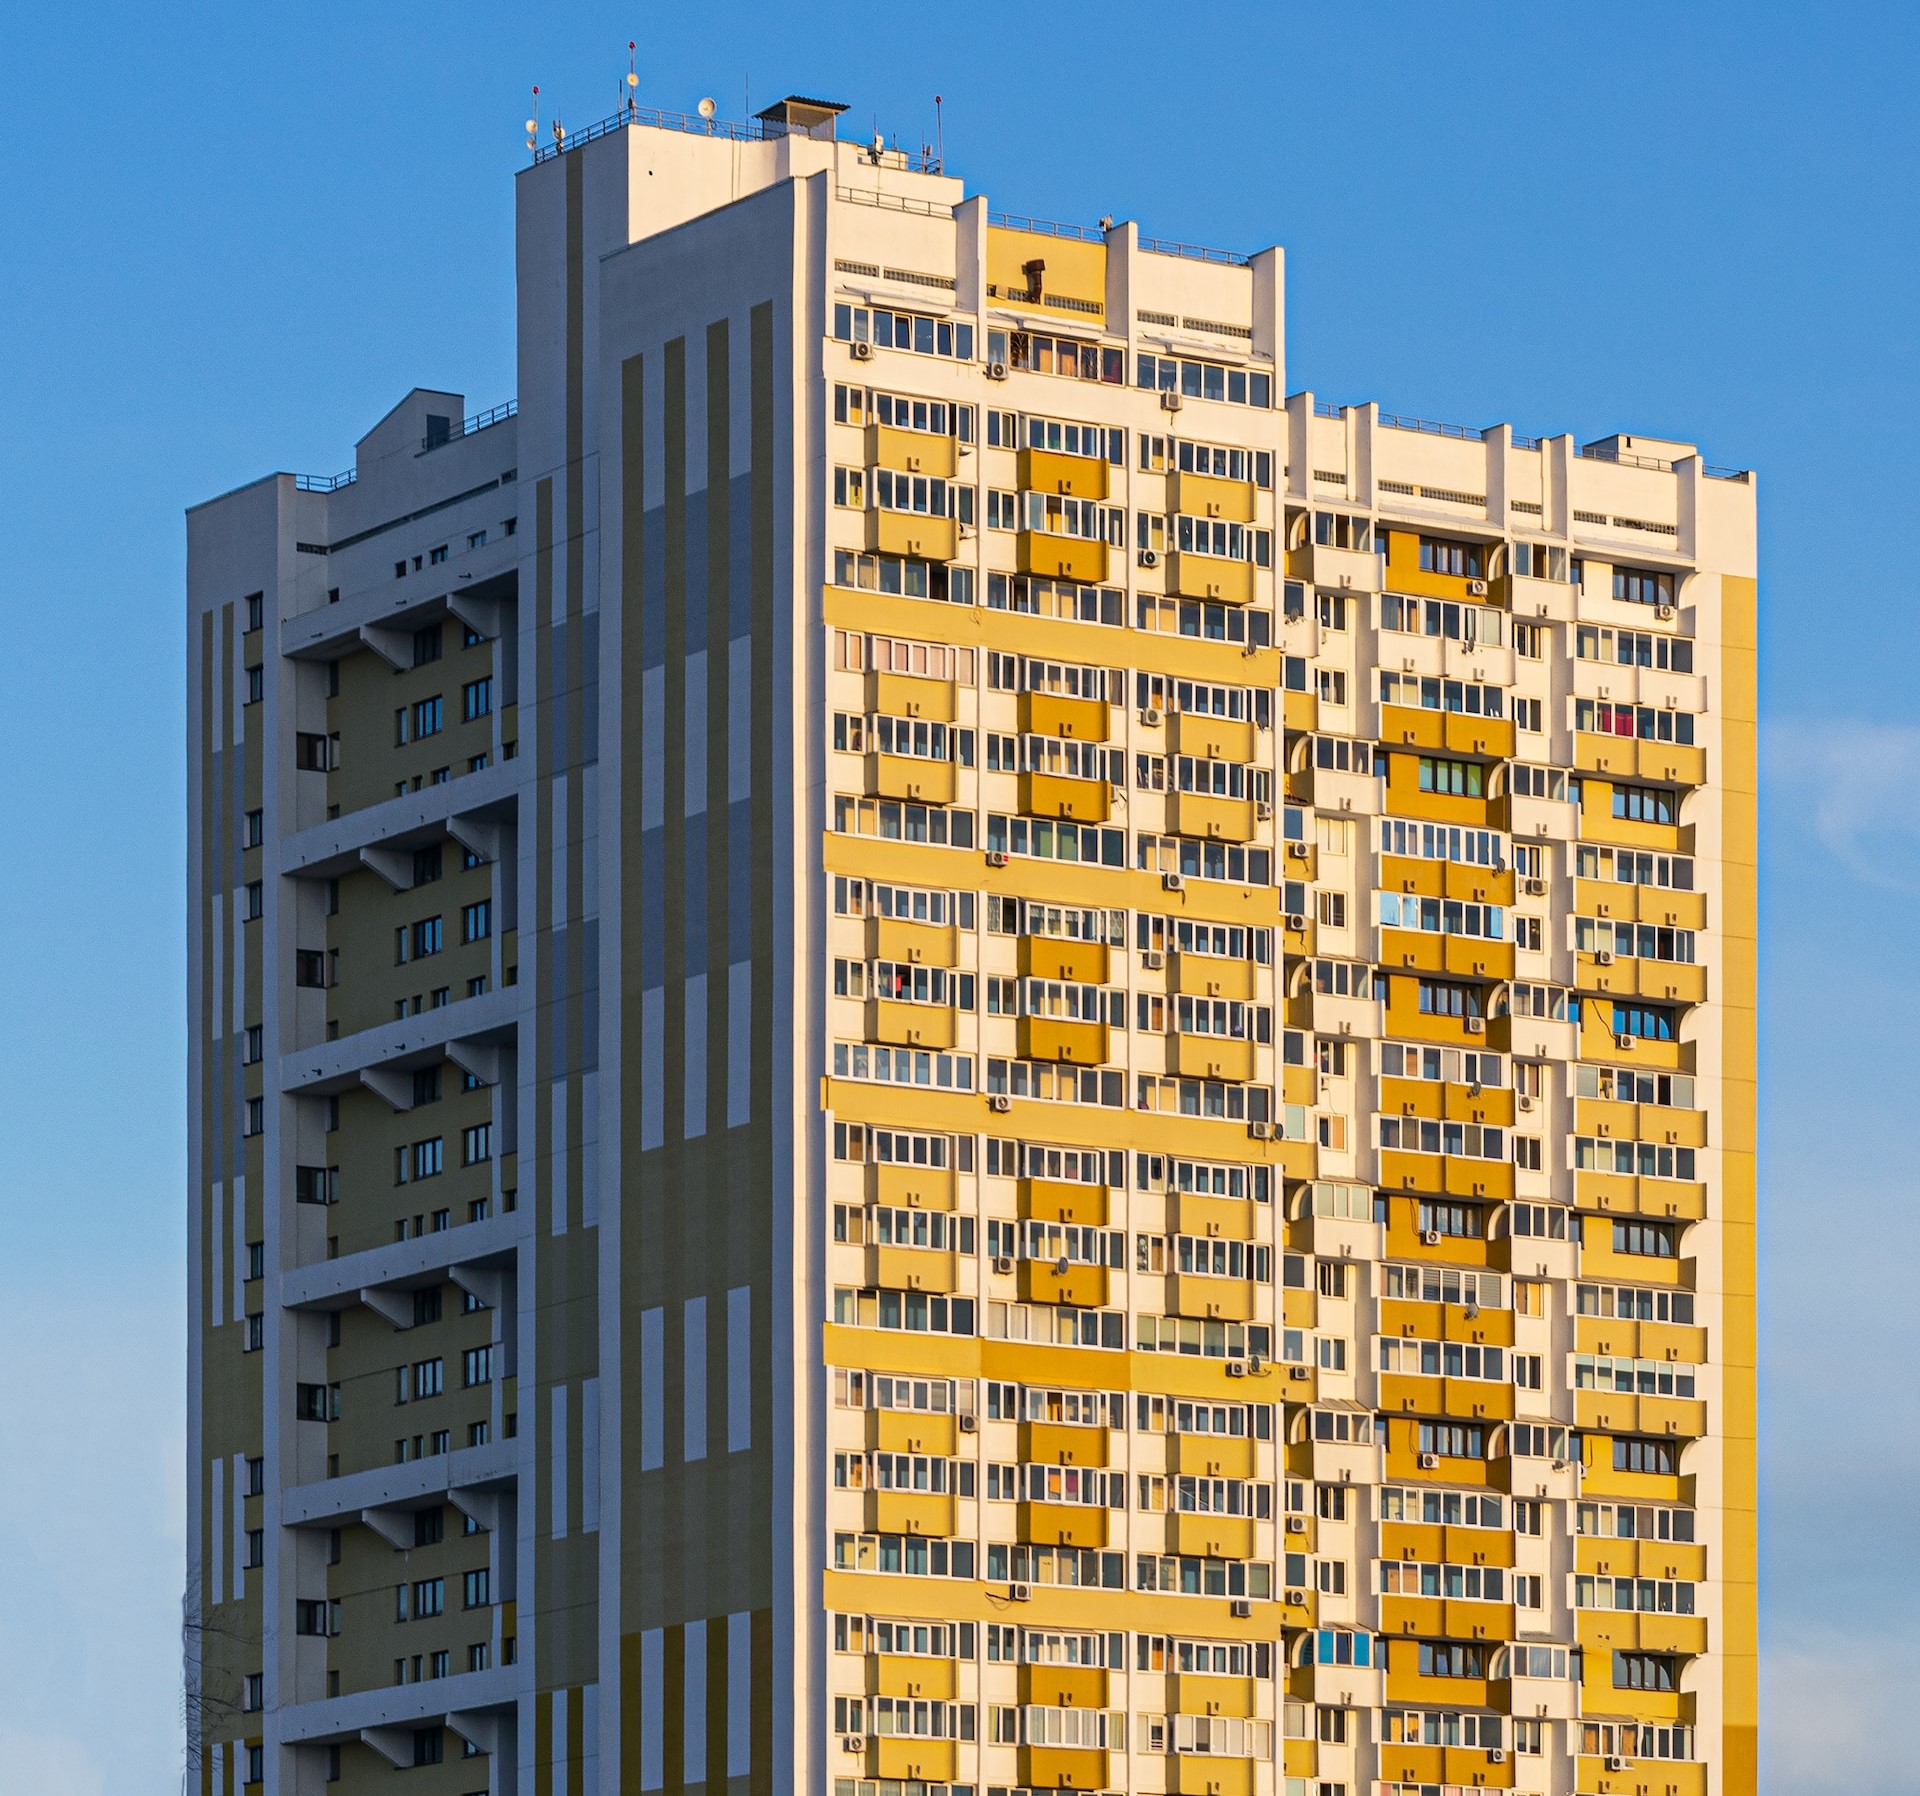 A high rise block of flats